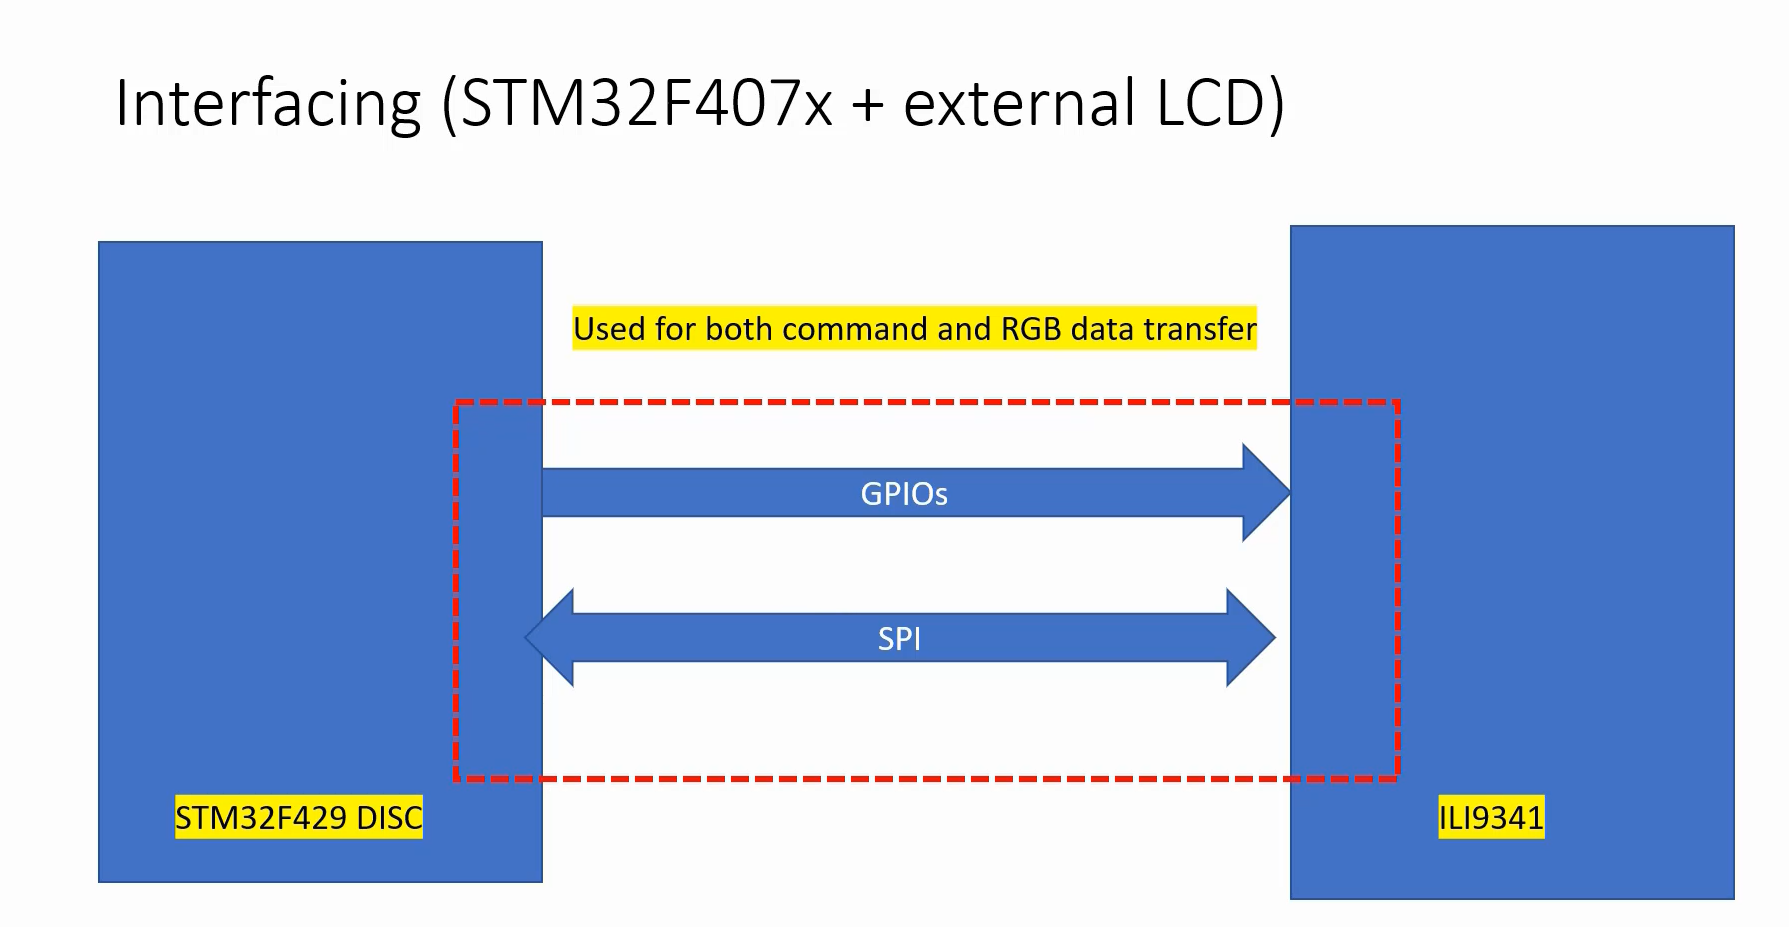 Figure 3. Interfacing(STM32F407x + external LCD)